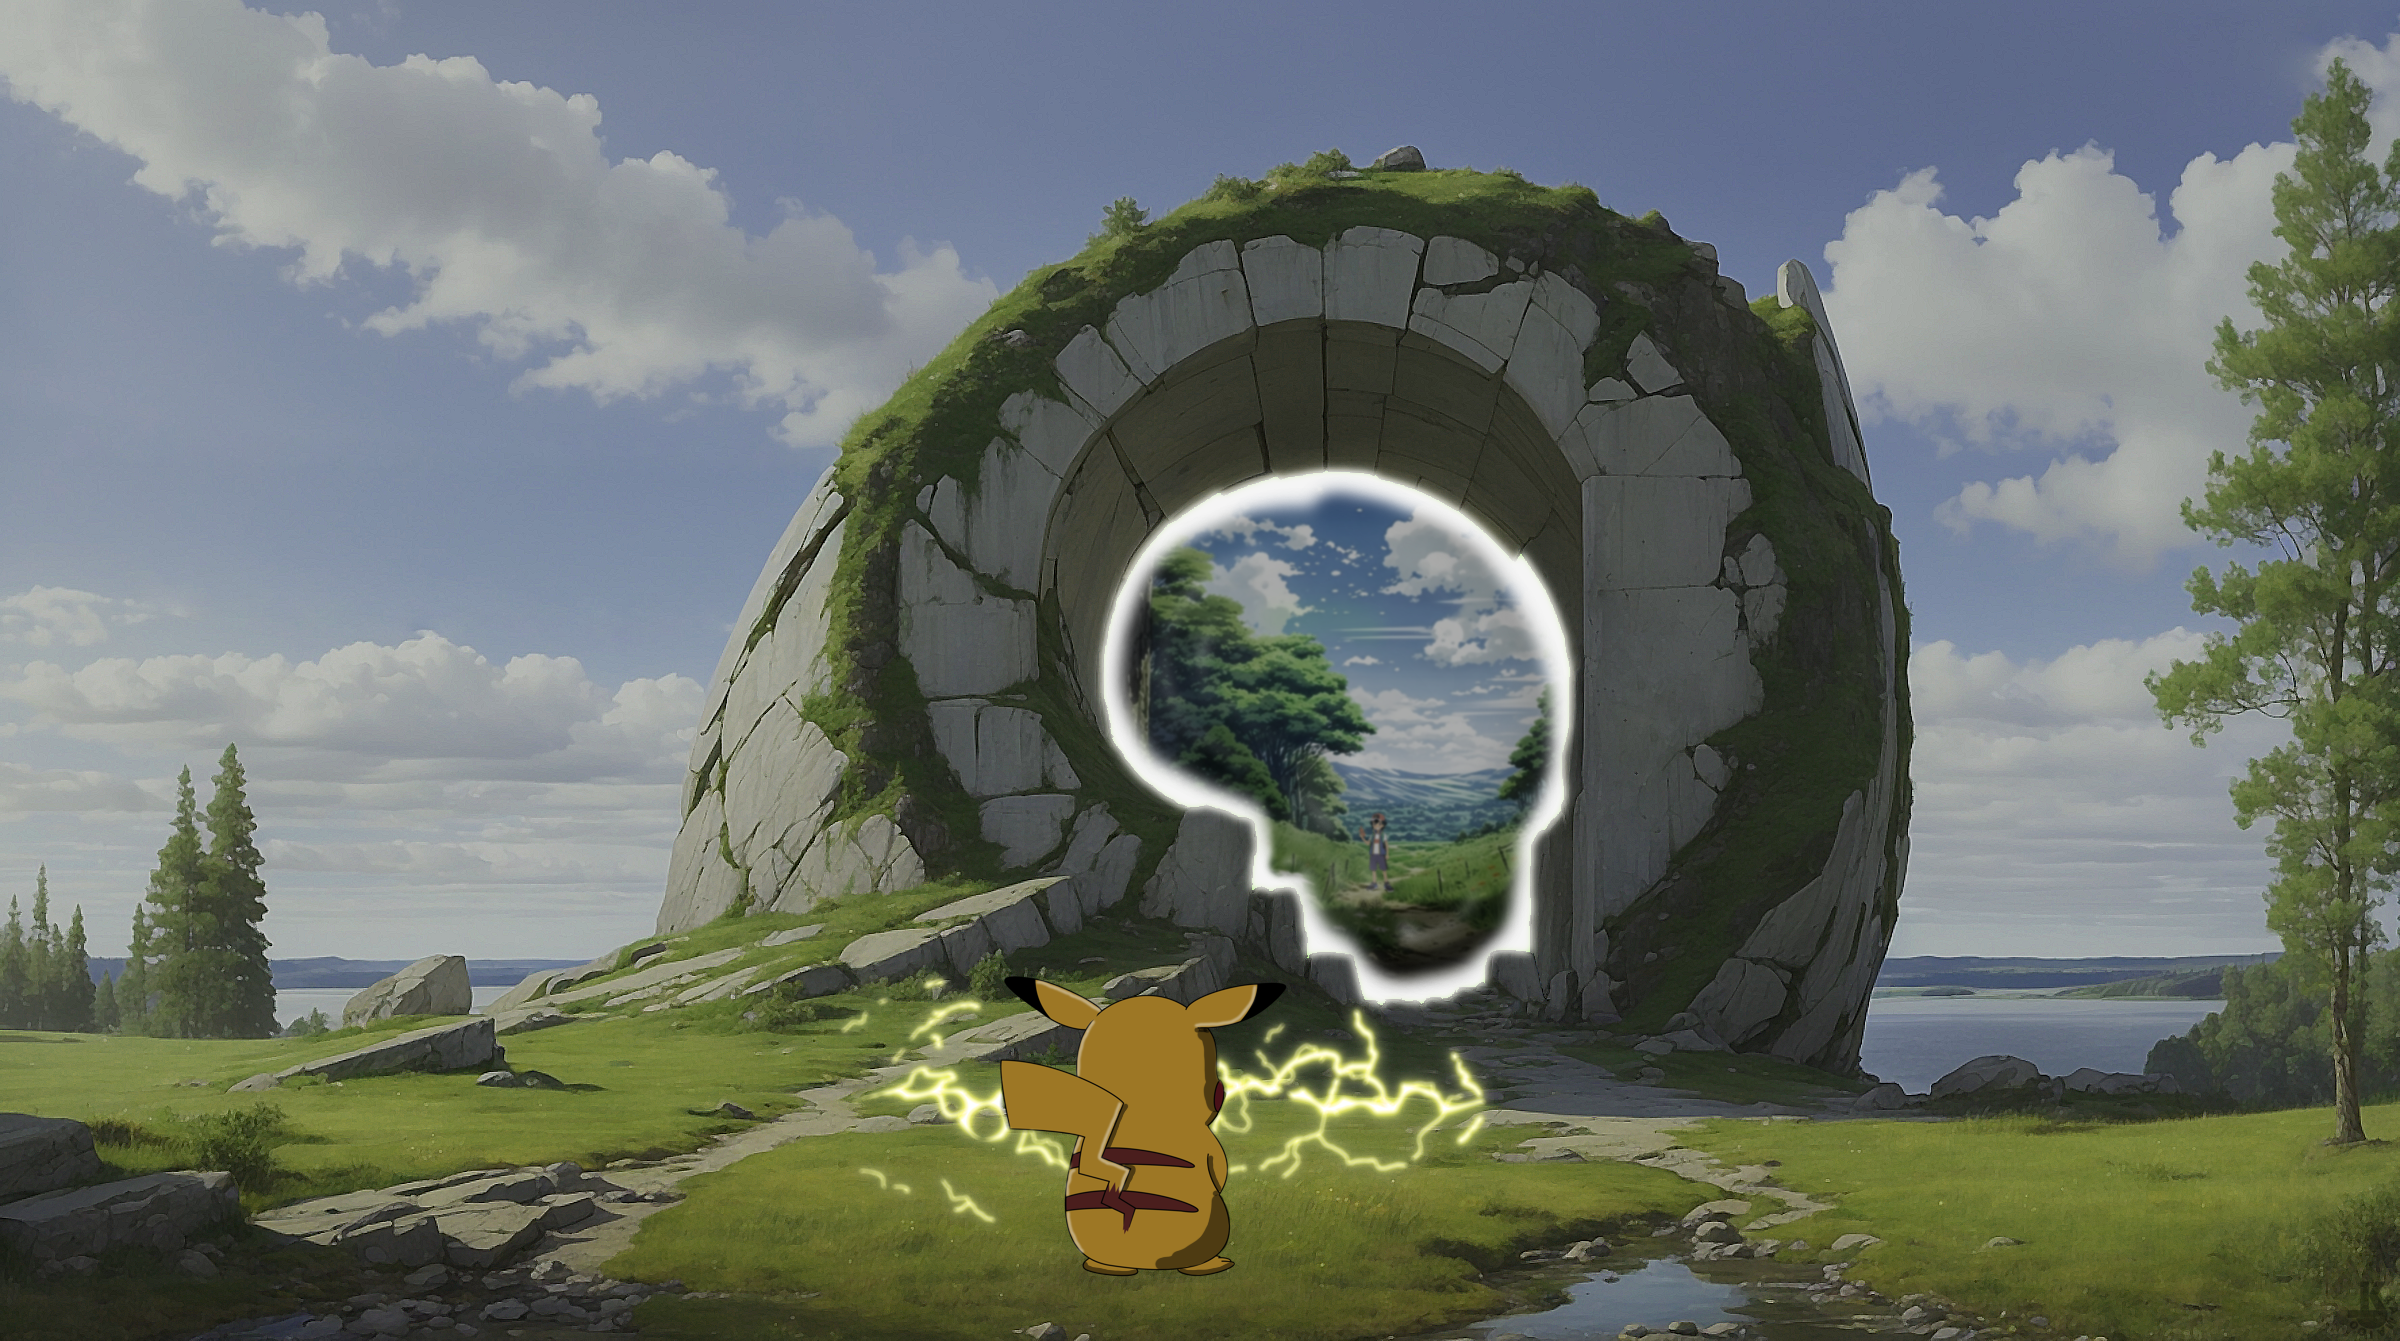 Digital Art Ash Ketchum Pikachu Portals Saturation Friendship Photoshopped Trees Grass Sky Clouds Wa 2400x1341